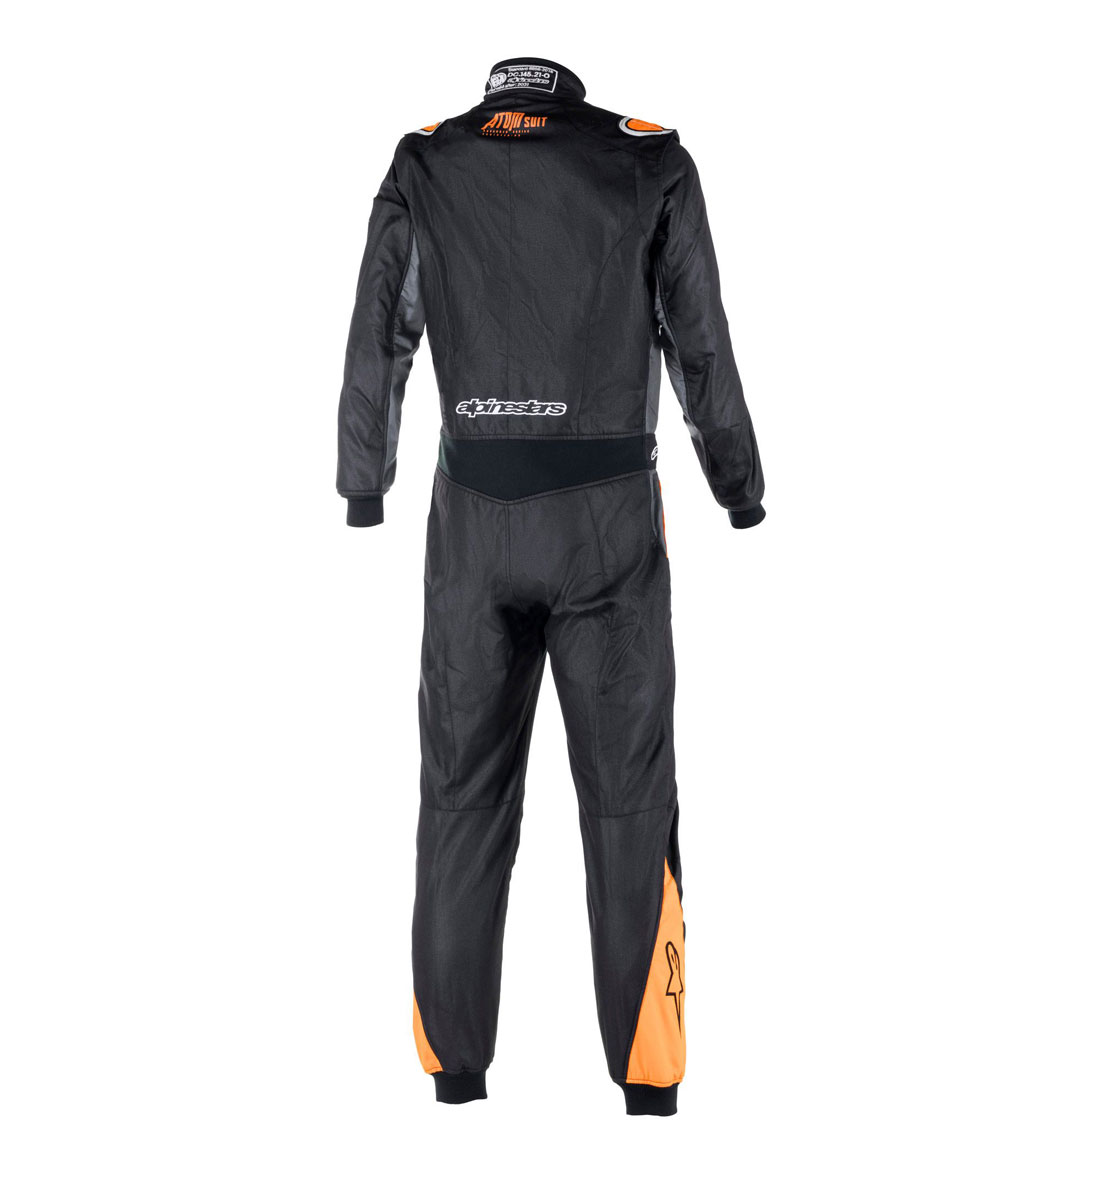 Alpinestars Youth Atom Race Suit - Black/Anthracite/Orange Fluo